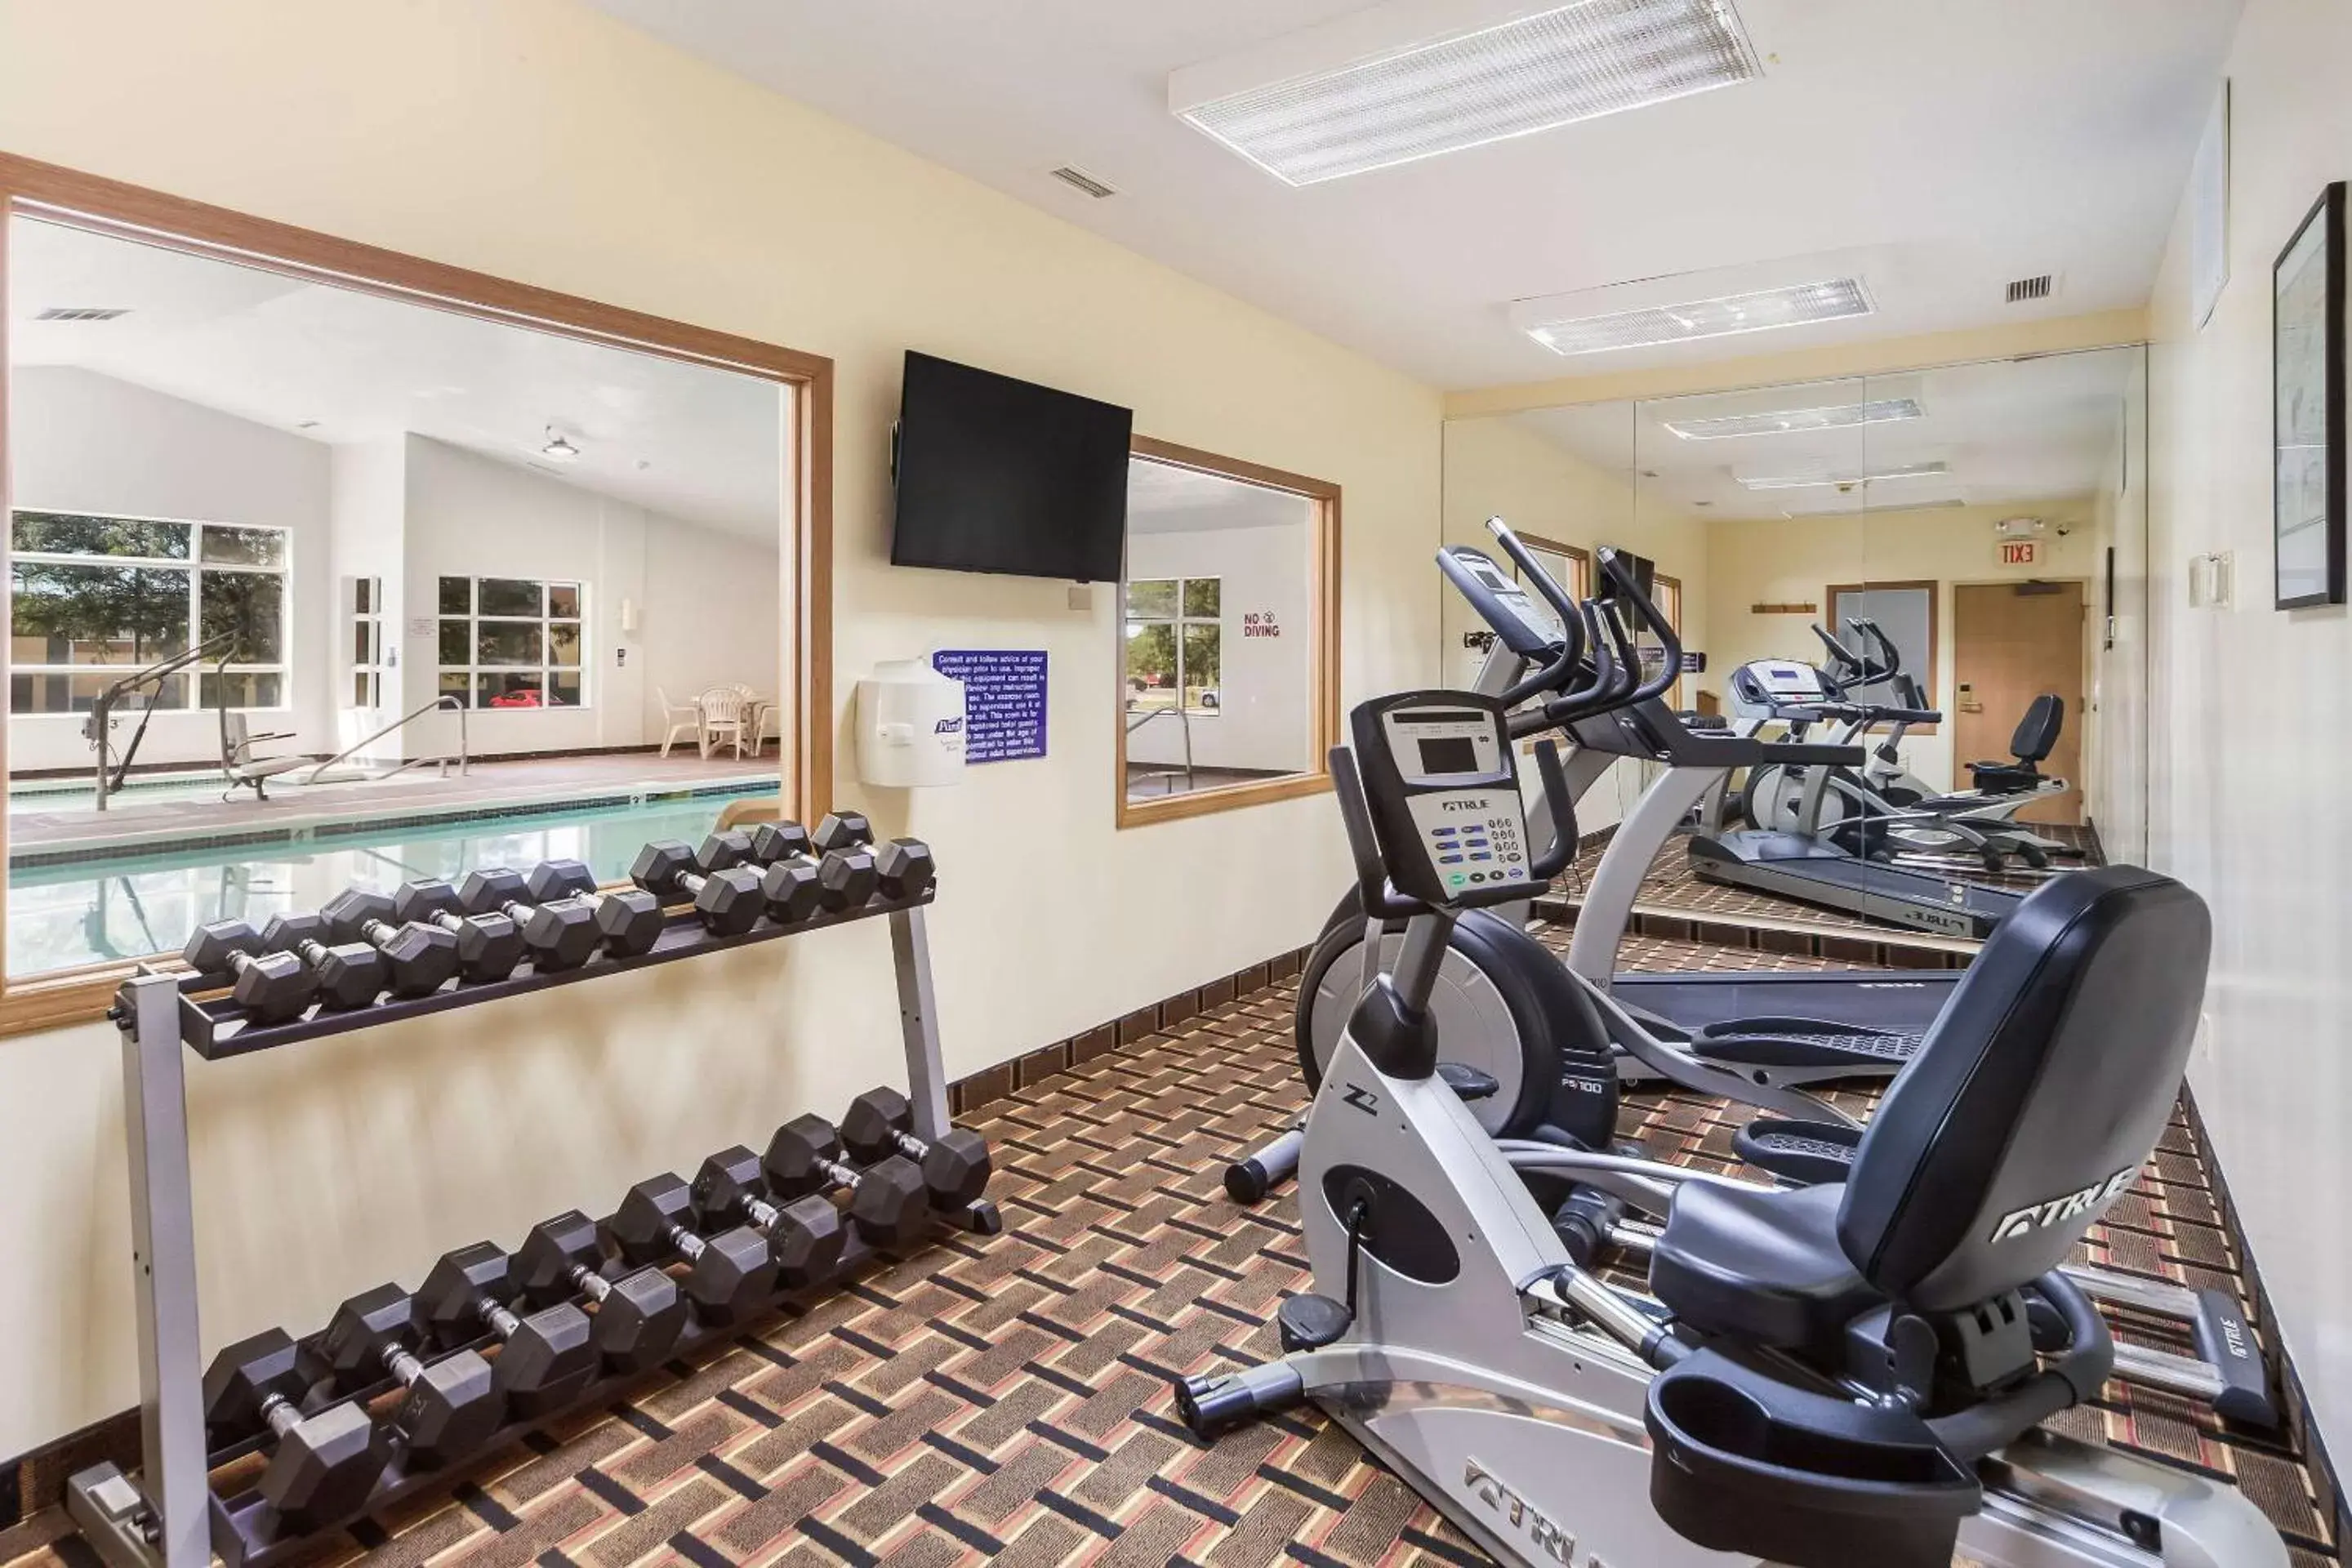 Fitness centre/facilities, Fitness Center/Facilities in Quality Inn Lincoln Cornhusker